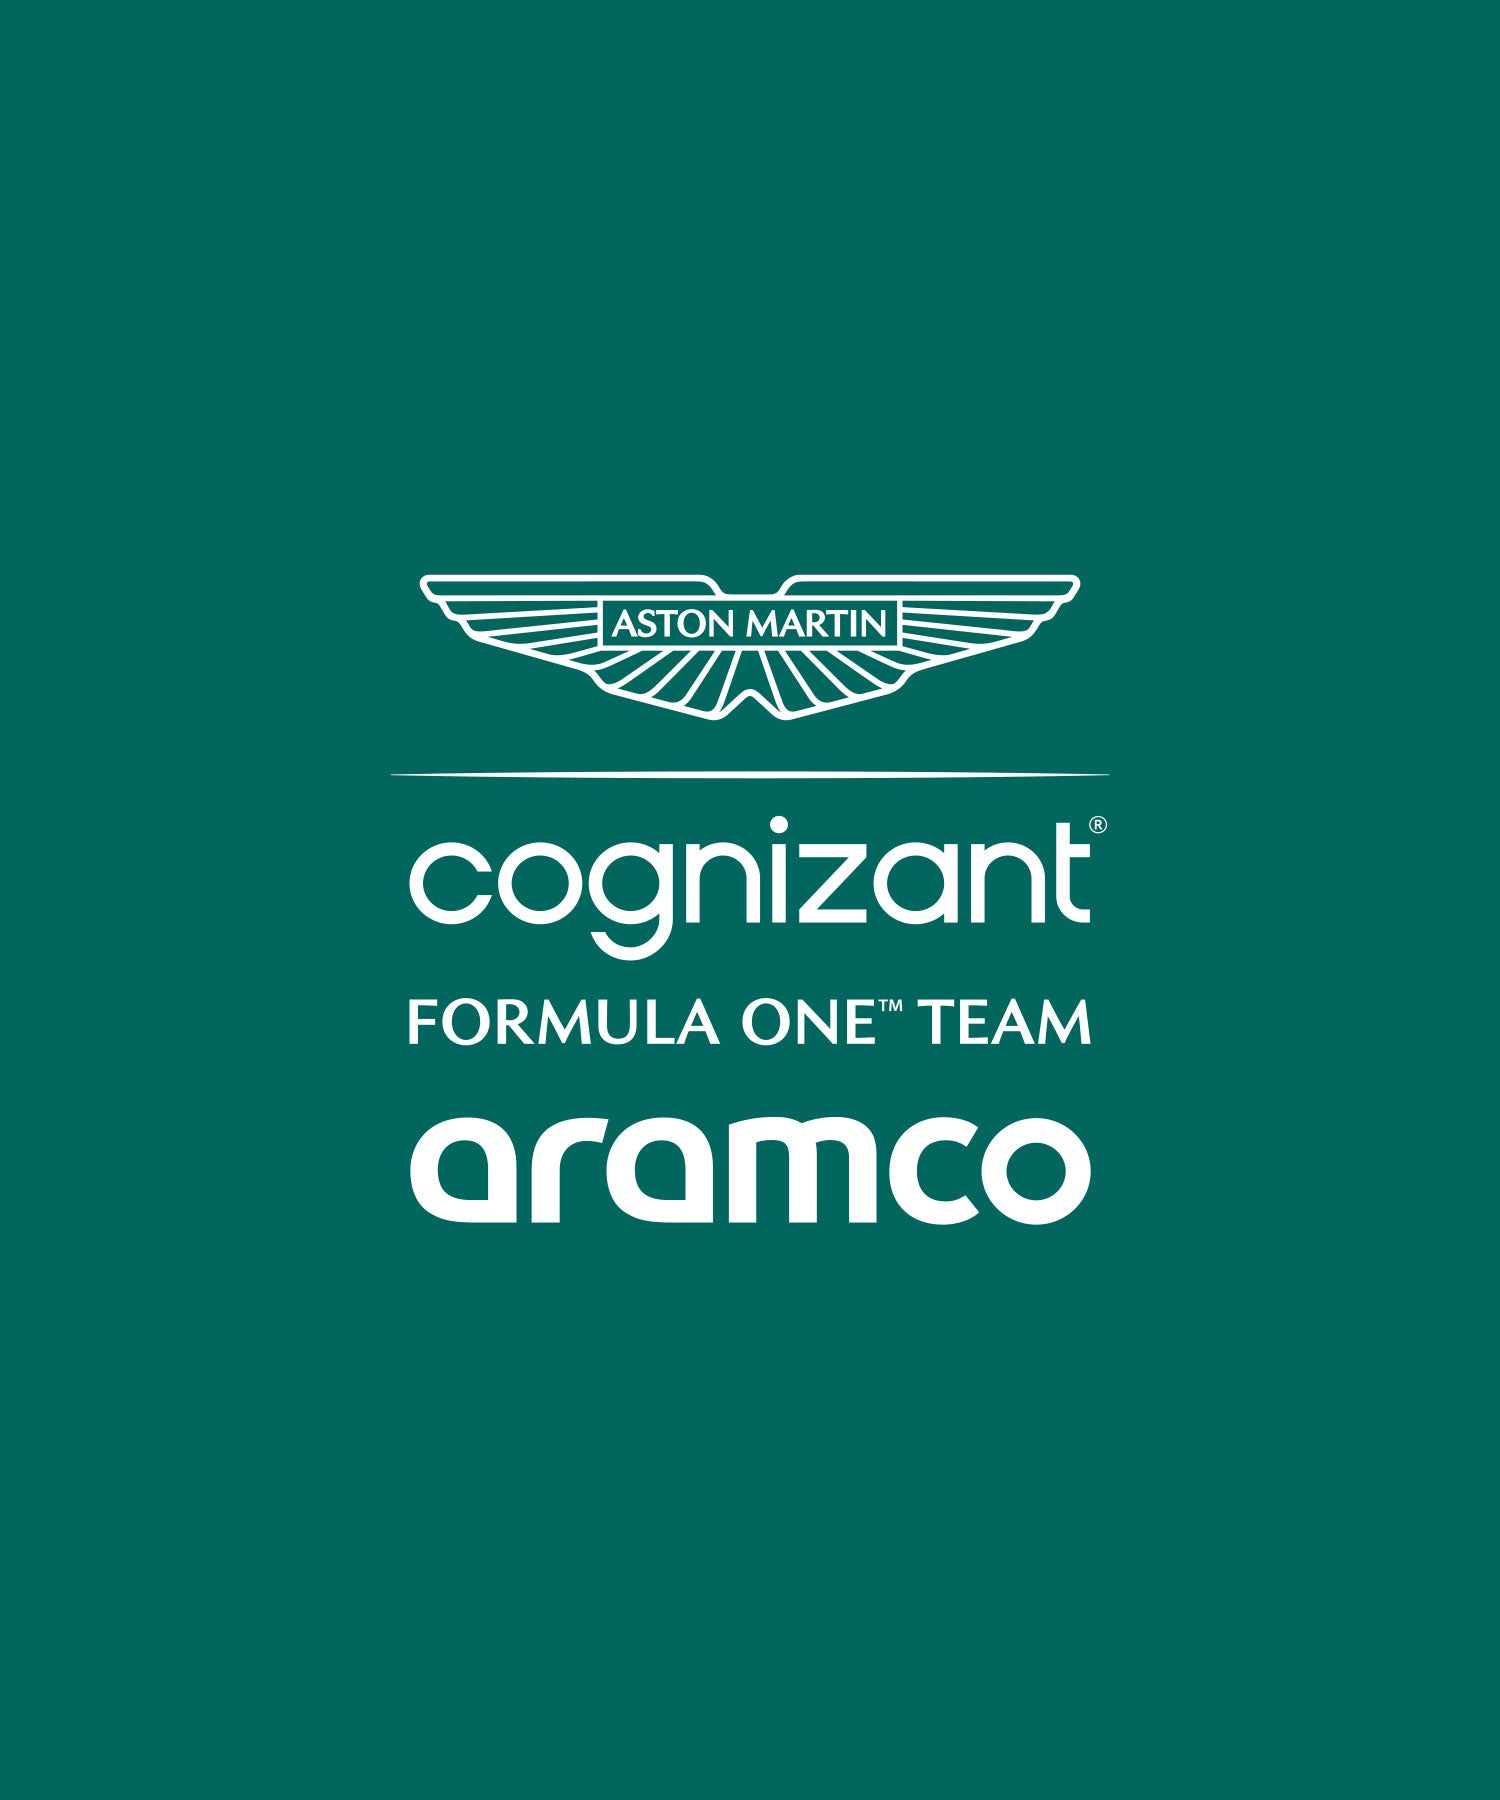 Aston Martin Cognizant F1 Merchandise Shop